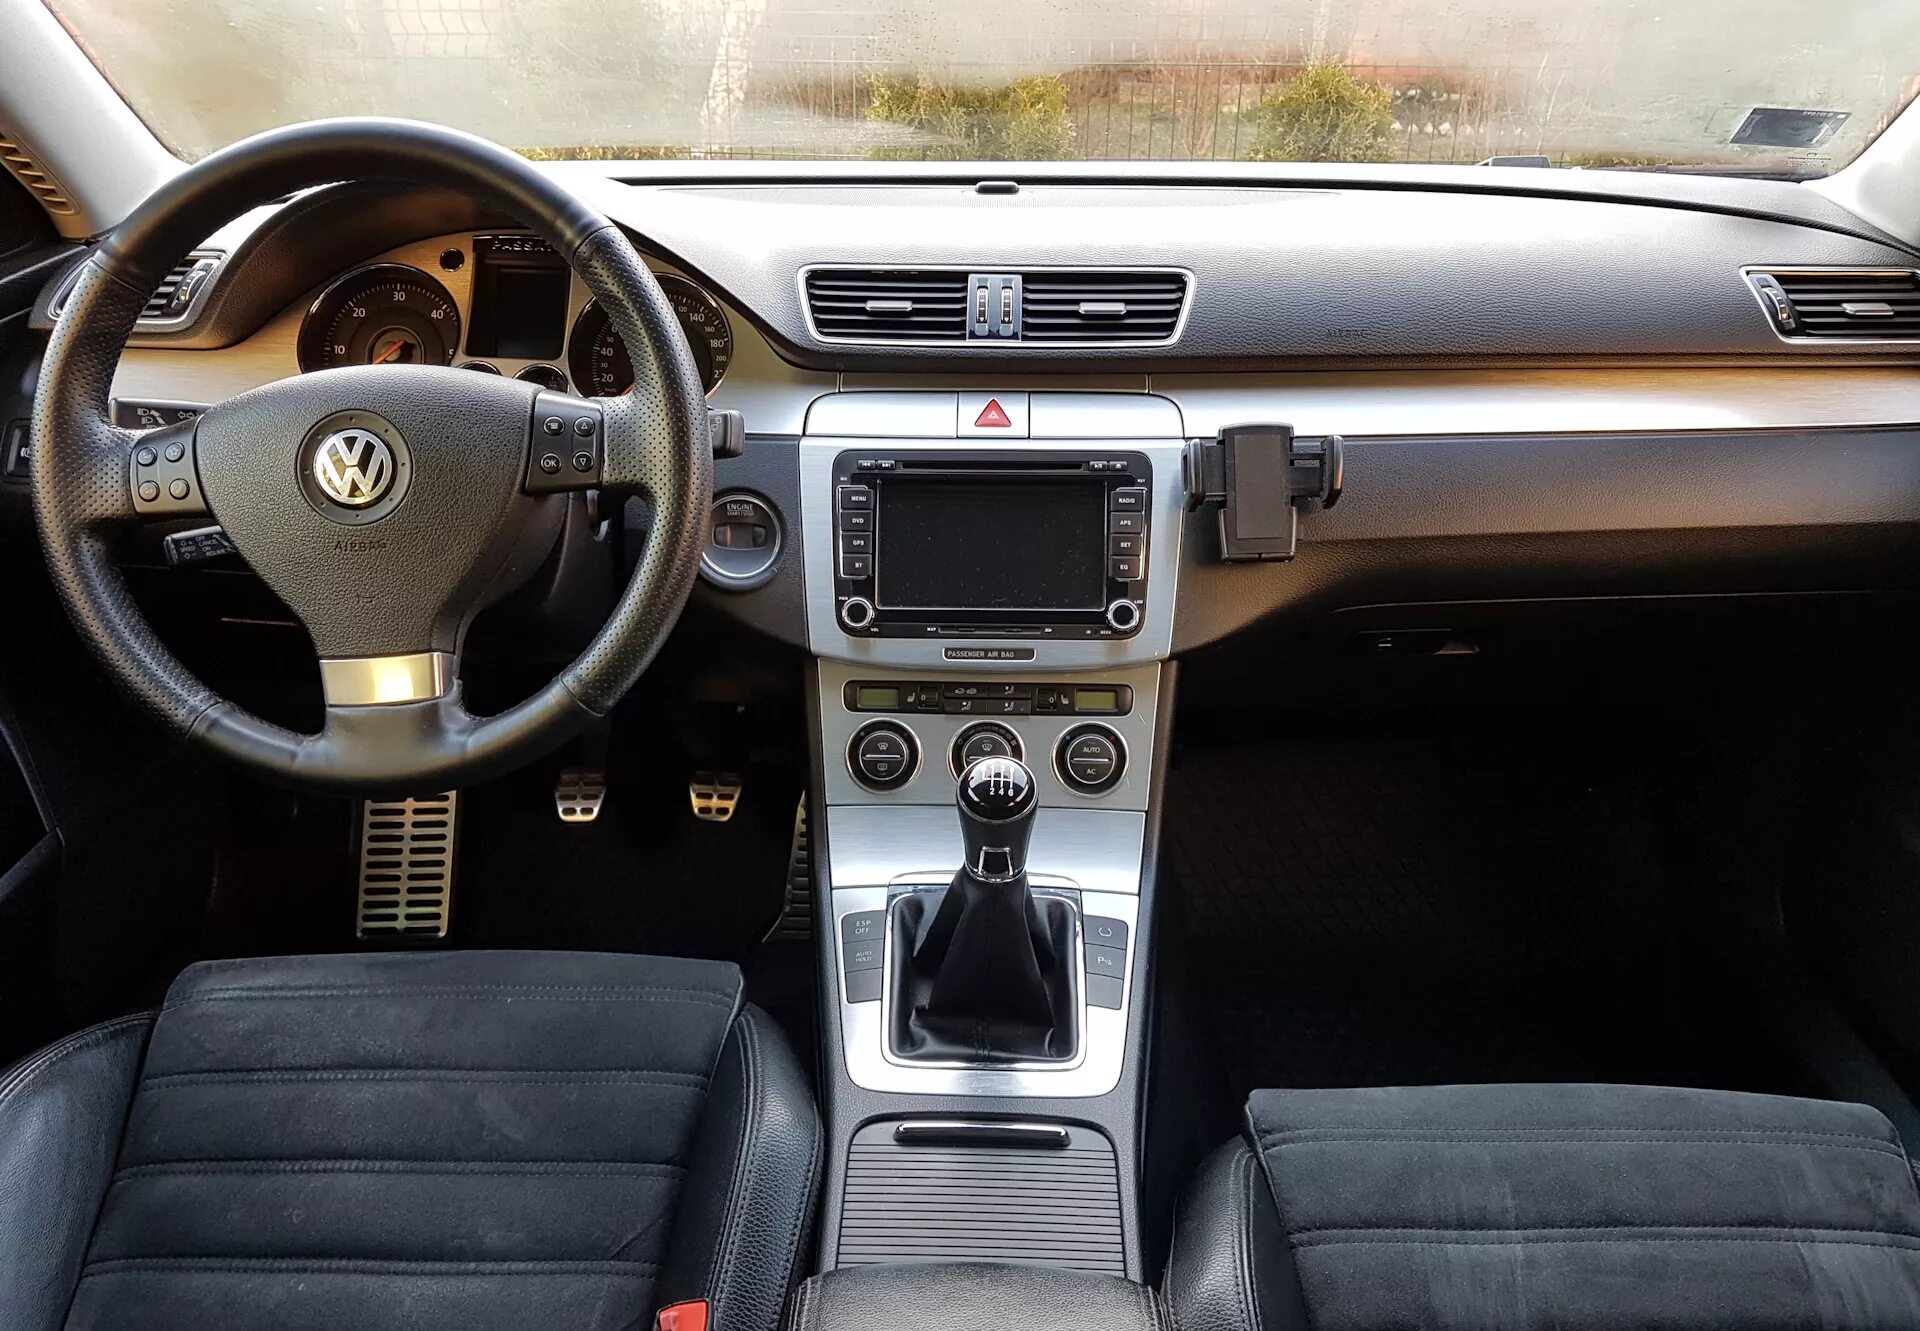 VW Passat b6 салон. Фольксваген Пассат б6 2008 салон. WV Passat b6 салон. Volkswagen Passat b6 Interior. Фольксваген пассат б6 2008